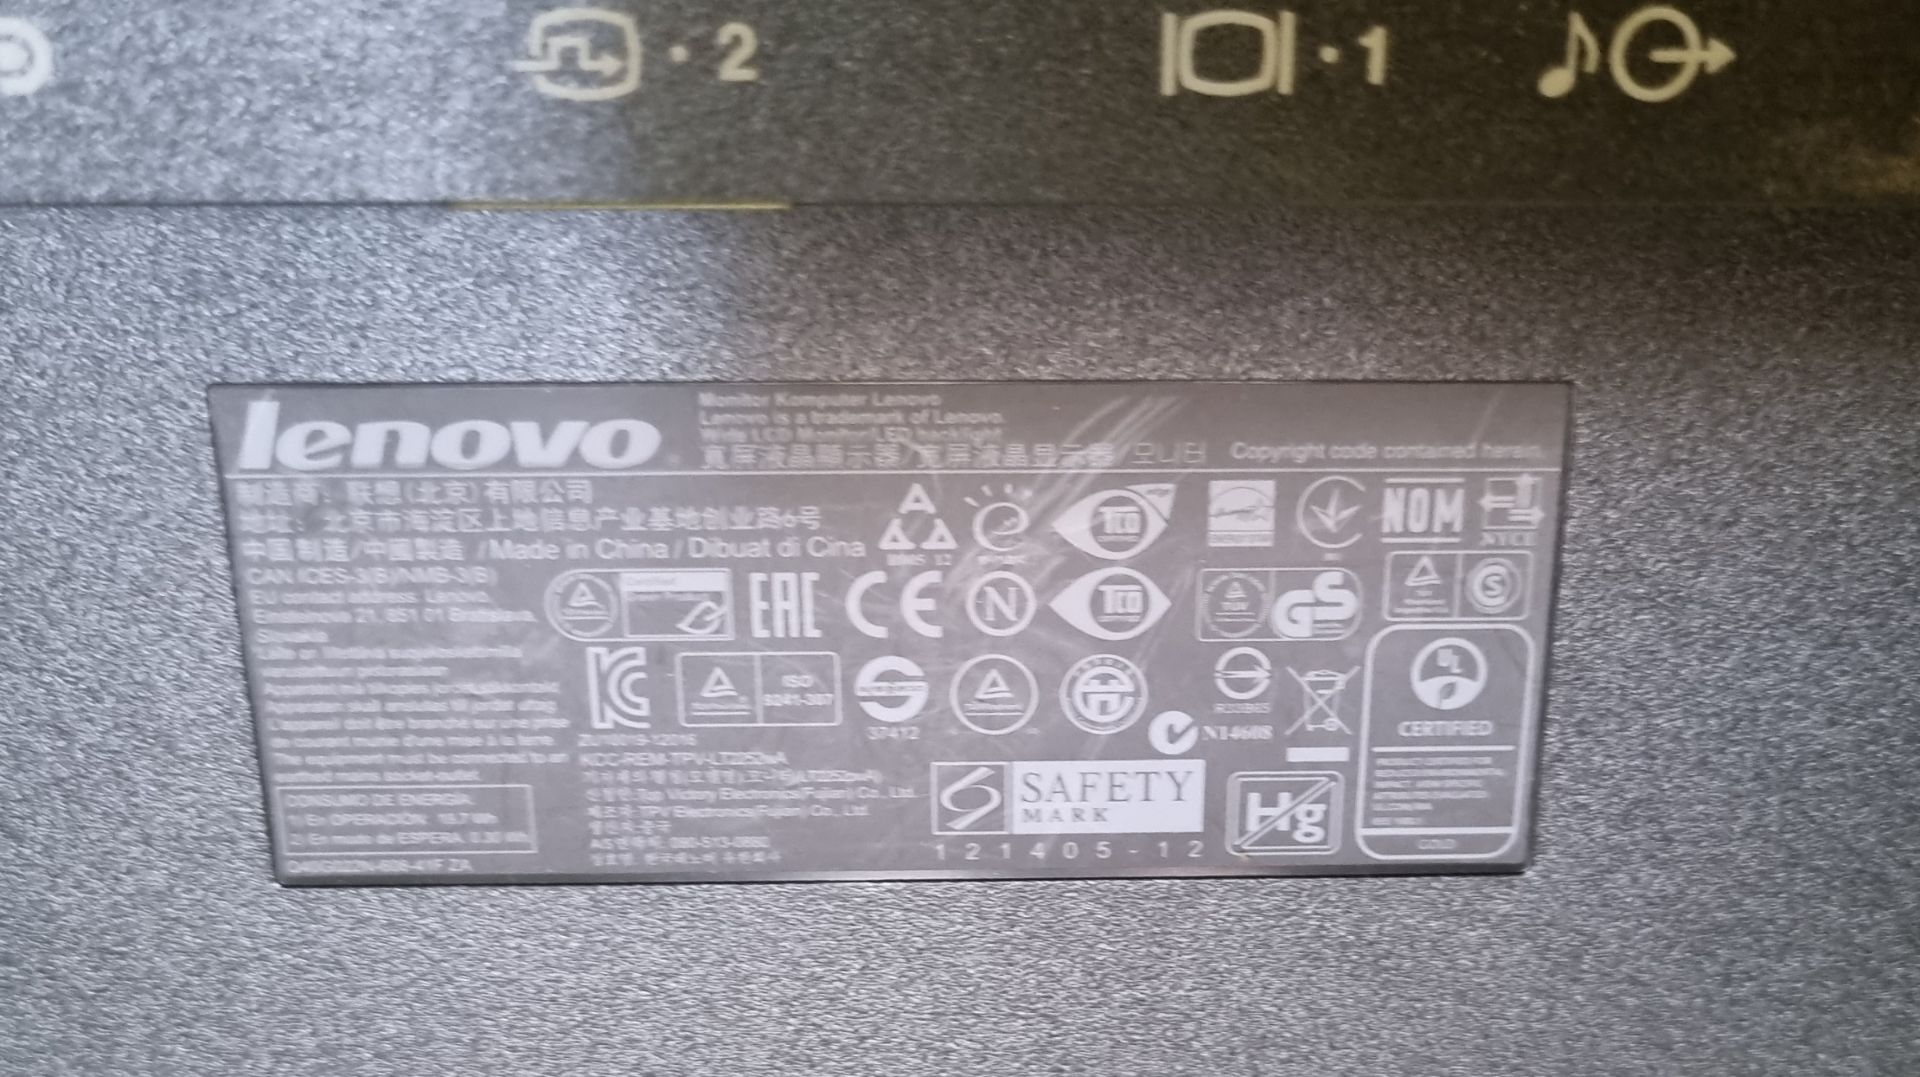 10x Lenovo ThinkVision 22 inch computer monitors - Image 4 of 4